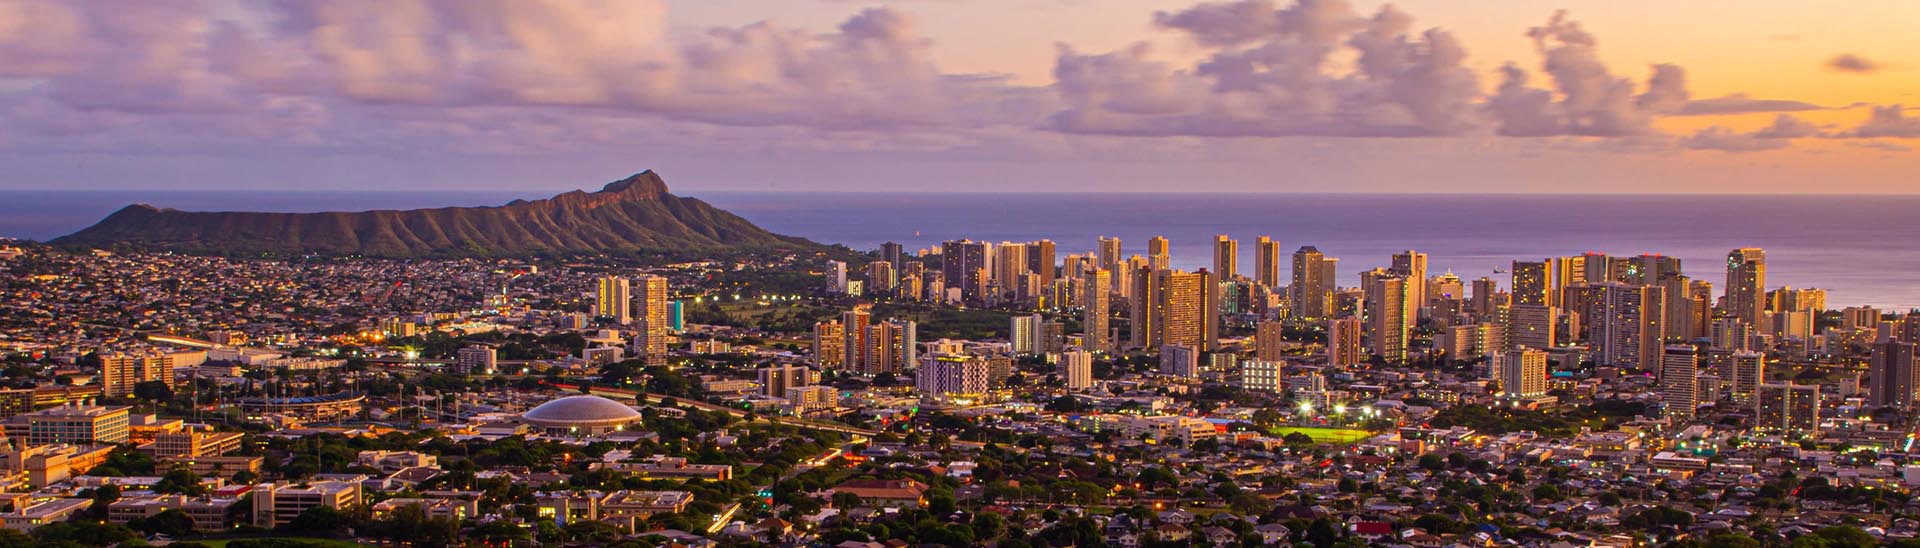 Cheap Flights To Honolulu (HNL)